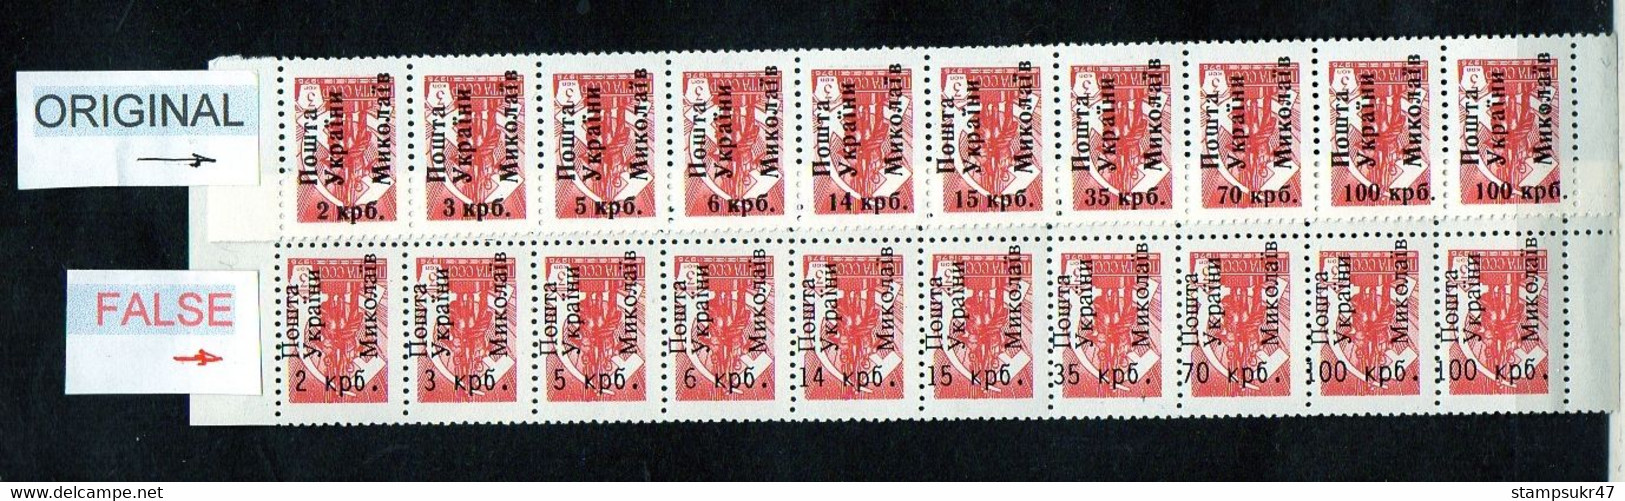 Ukraine 1993 Mykolaiv -7 Nikolaev Local \ Provisional Set Of 18 Strips Of 10 Stamps / Overprints Direct And Reverse / ** - Ucrania